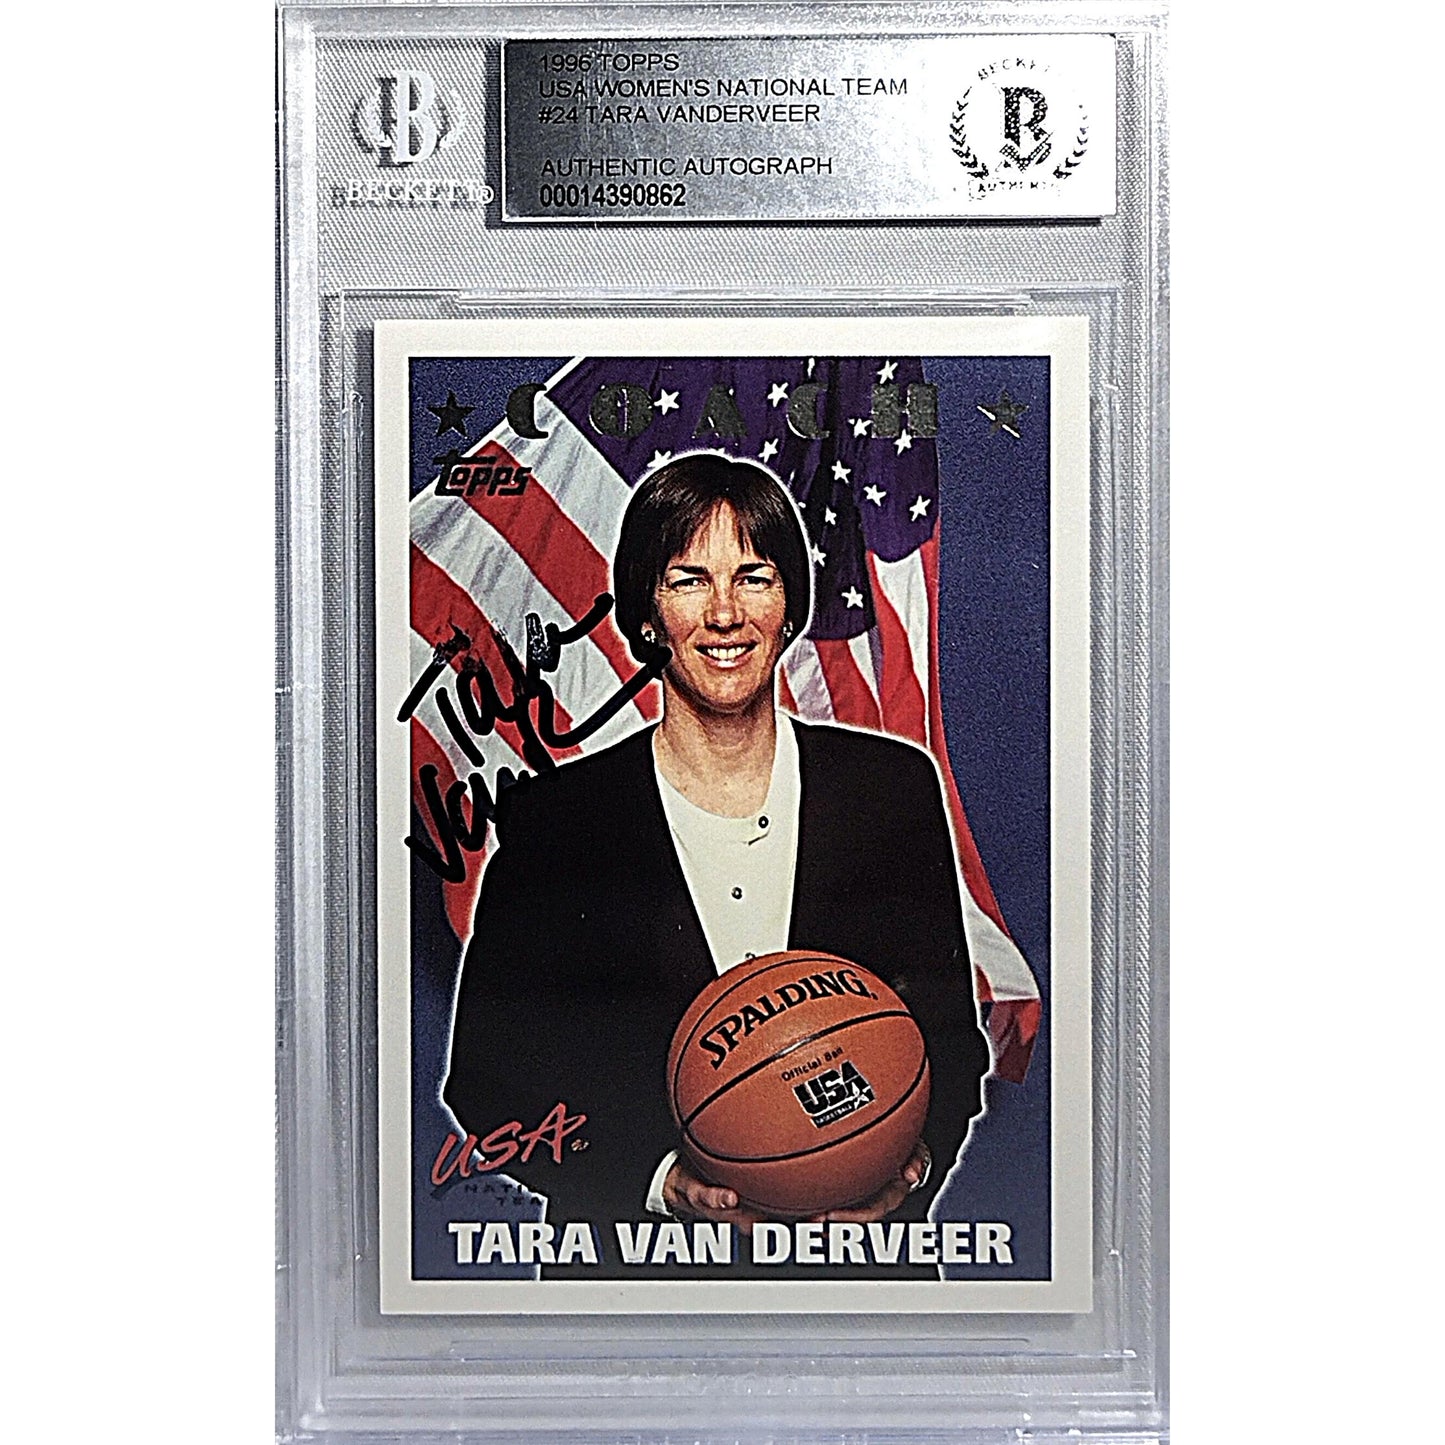 Basketballs- Autographed- Tara Vanderveer Signed 1996 Topps USA Women's National Team Basketball Card Beckett Slabbed 101